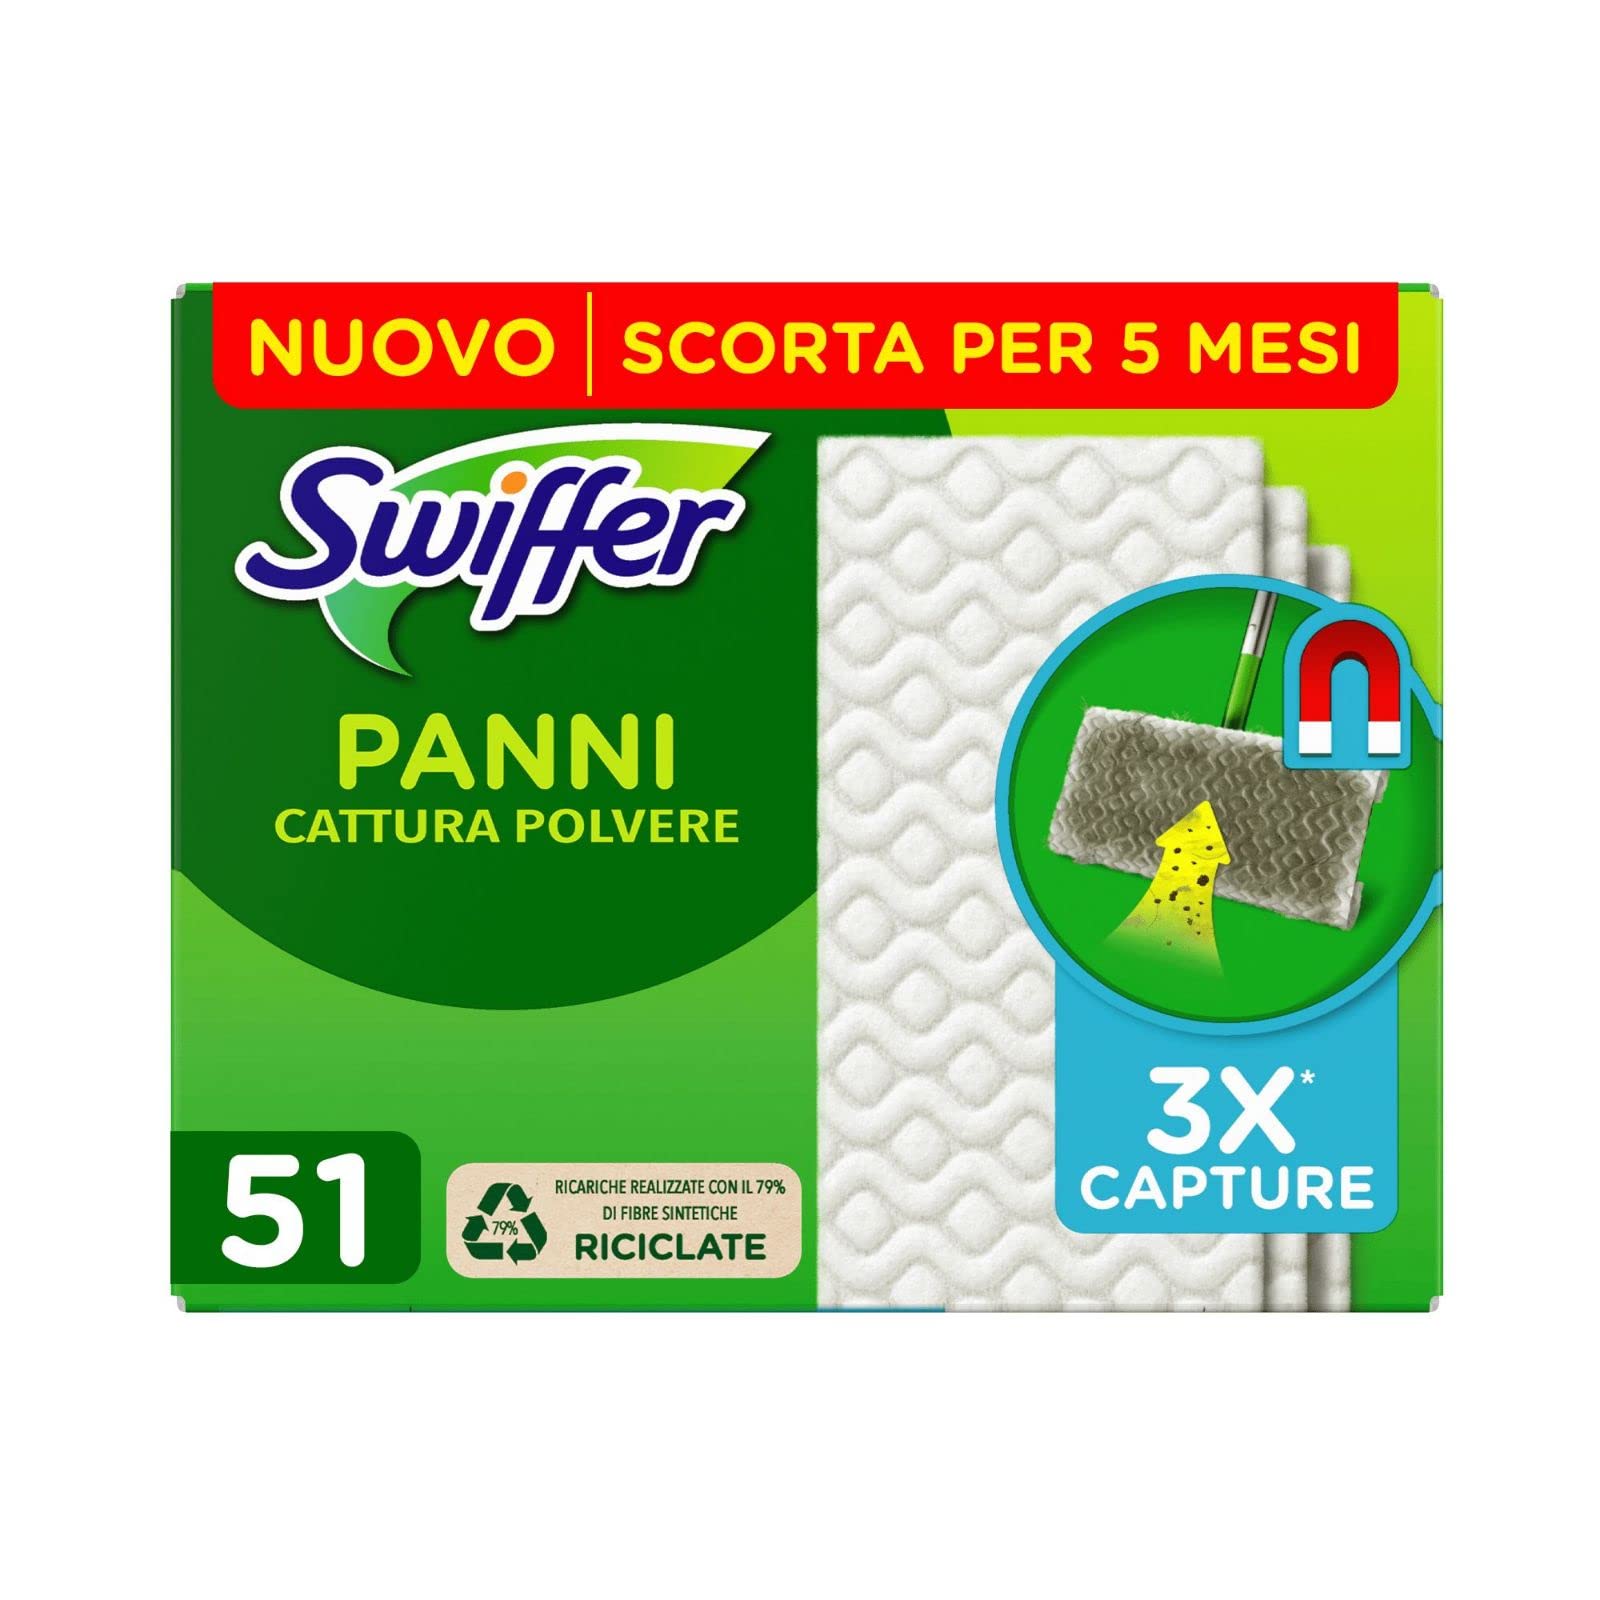 Swiffer Panni Catturapolvere, 51 Panni Microfibra Dry, Panni